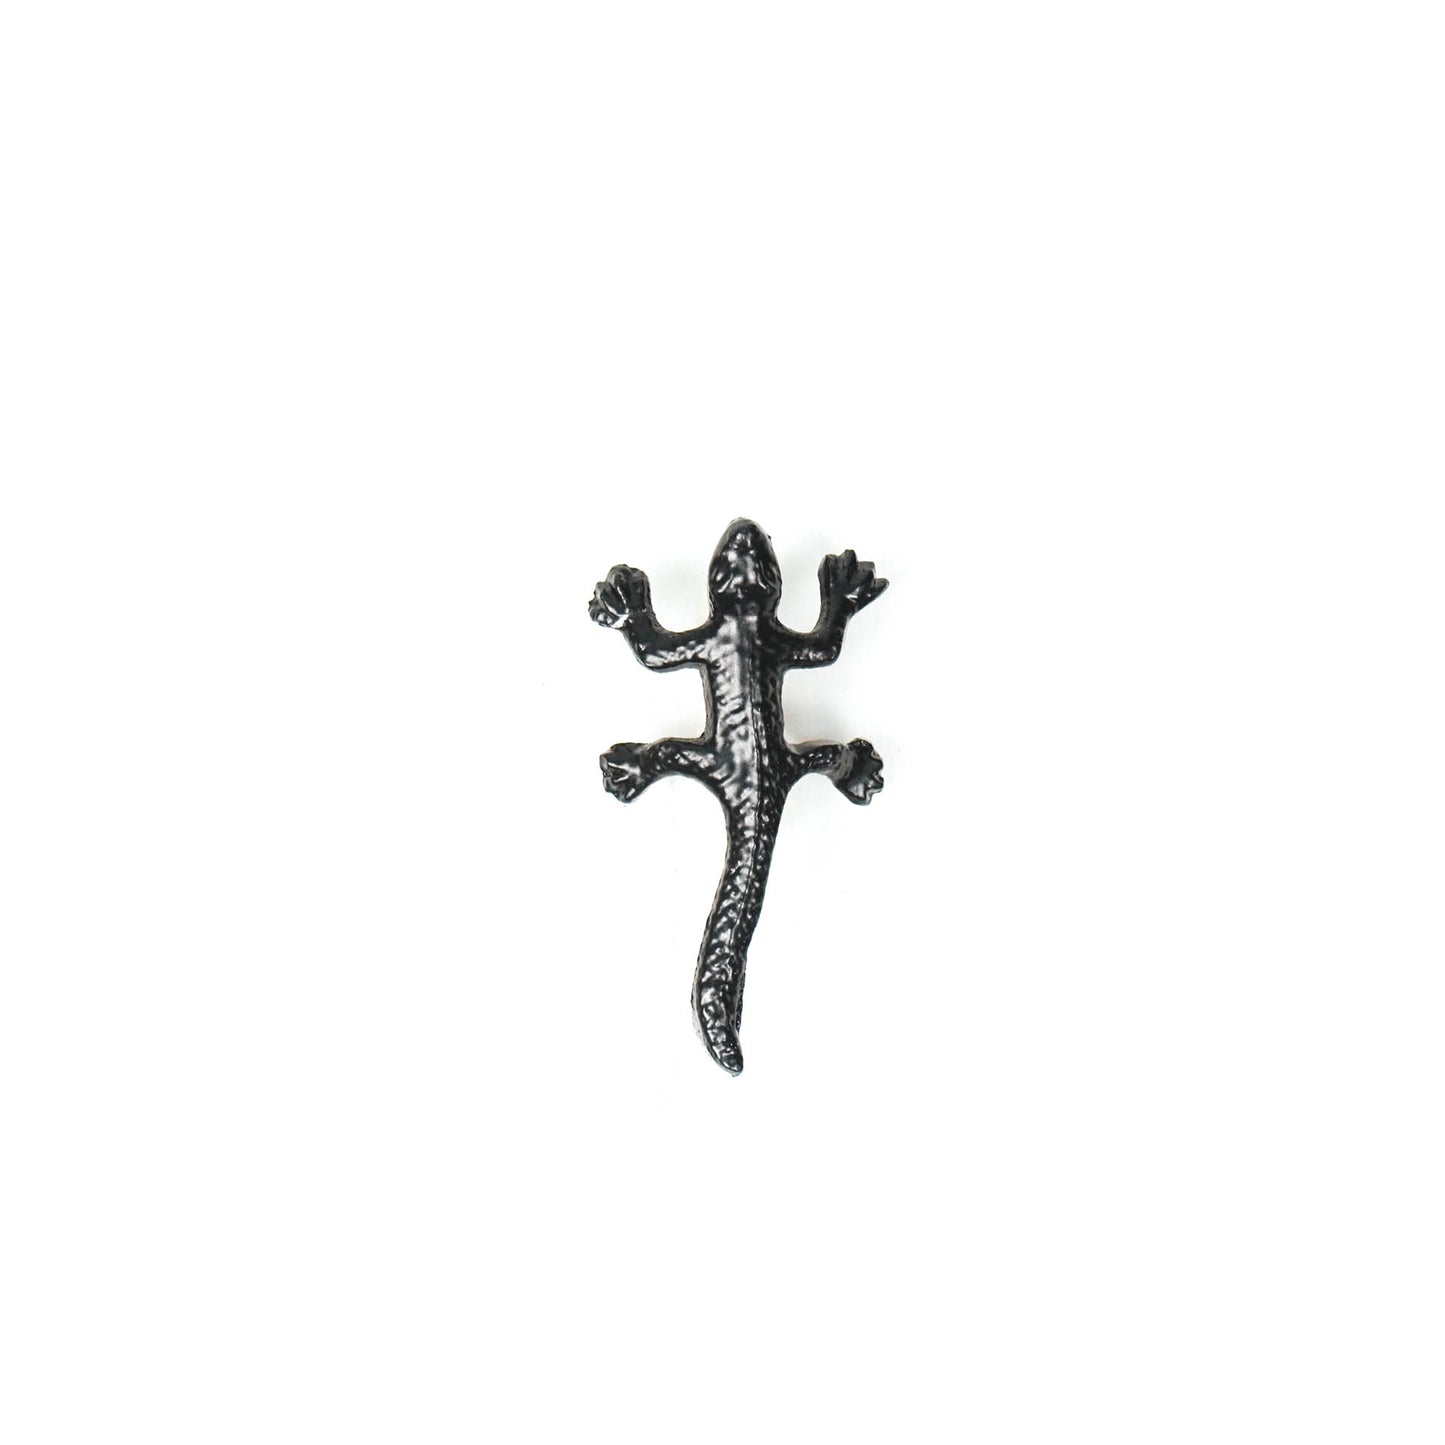 HV Candle pins - Salamander - Black - Set of 2 - 8x4x1cm